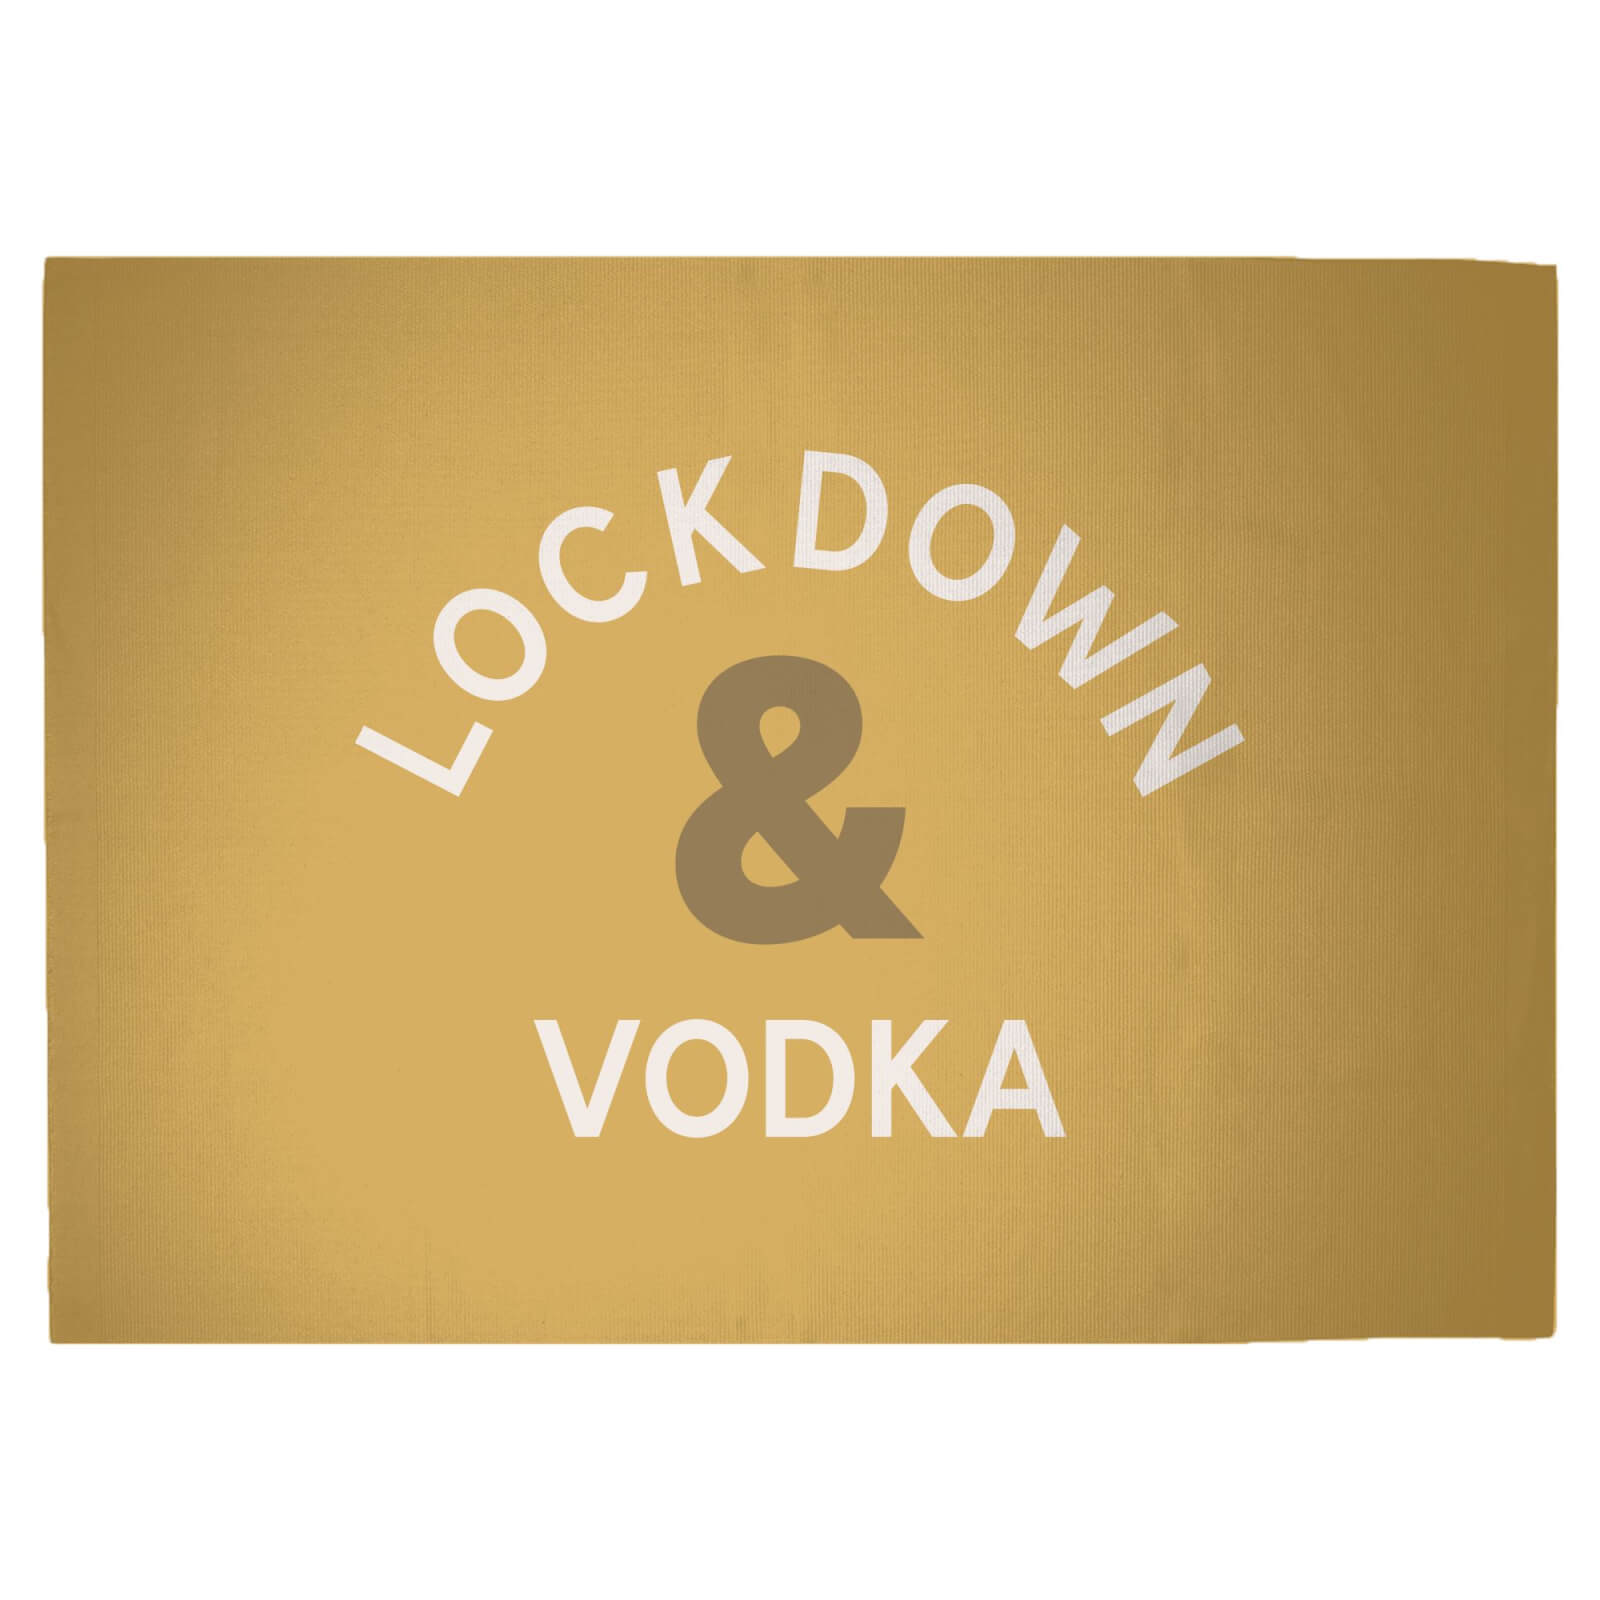 Lockdown & Vodka Woven Rug - Large